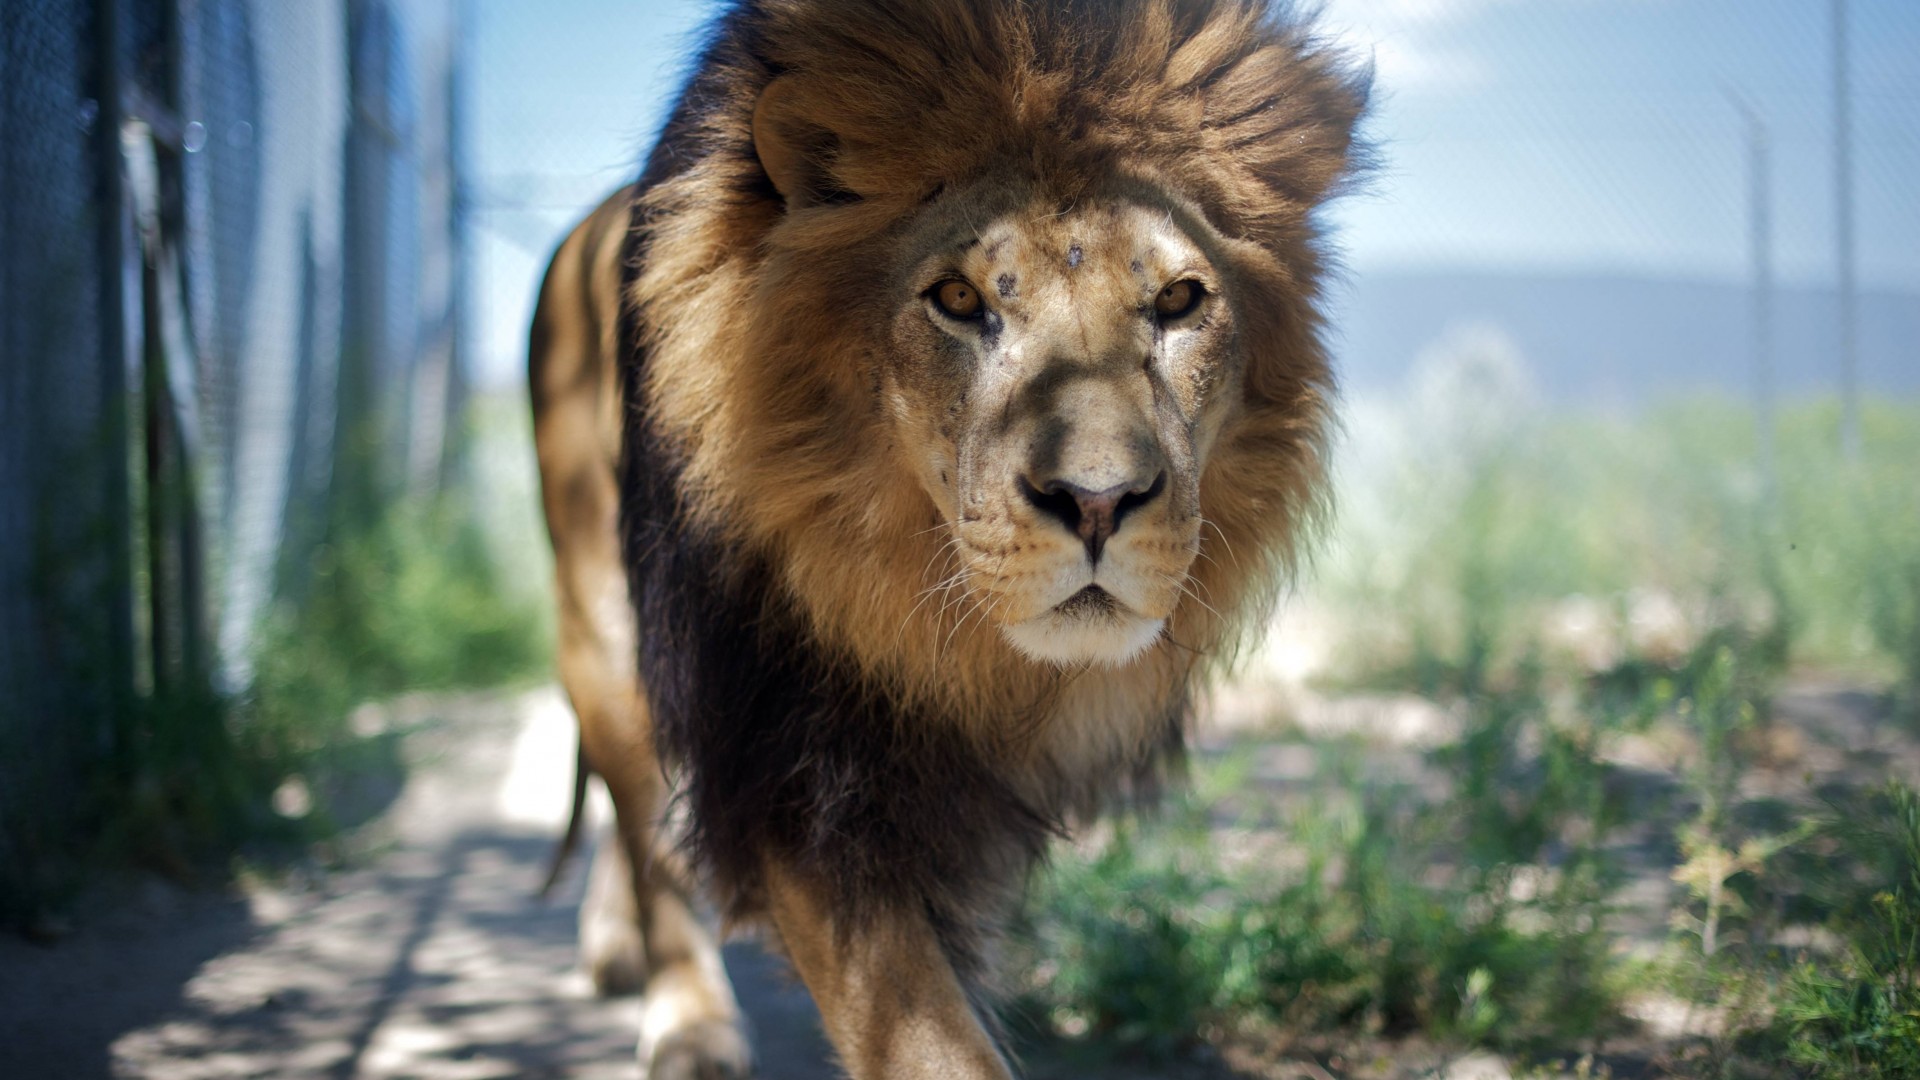 Lion, mane, step, nature, king of beasts, look, wild (horizontal)